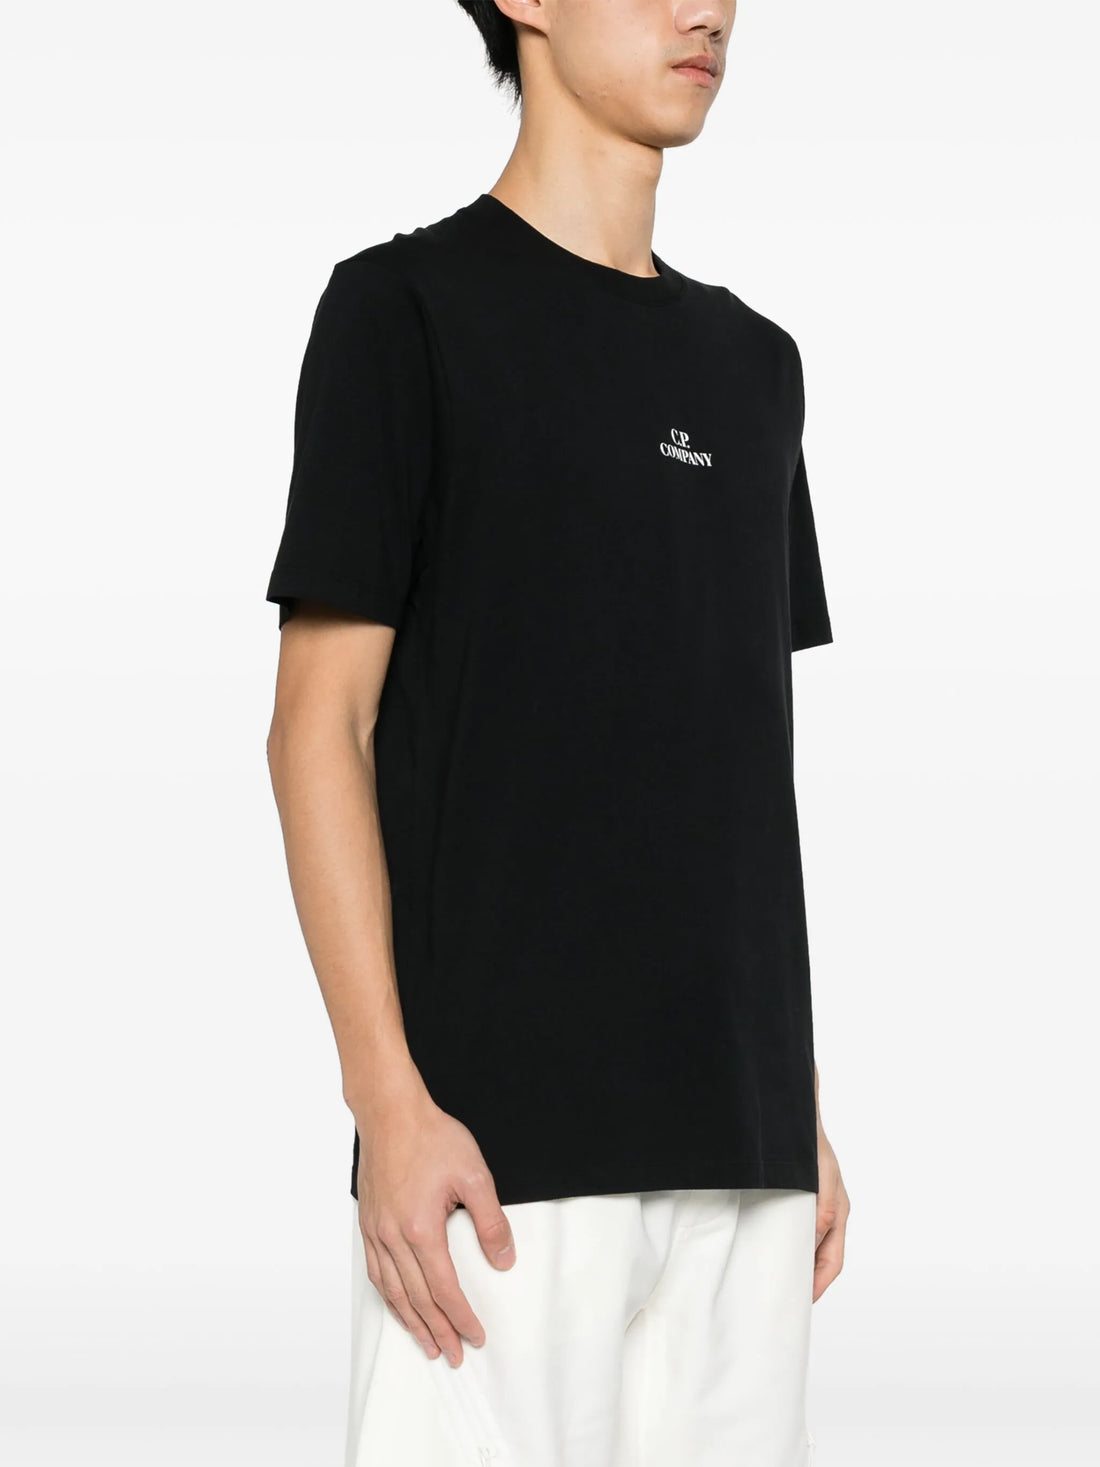 C.P. COMPANY Logo Graphic Print Cotton T-Shirt Black - MAISONDEFASHION.COM